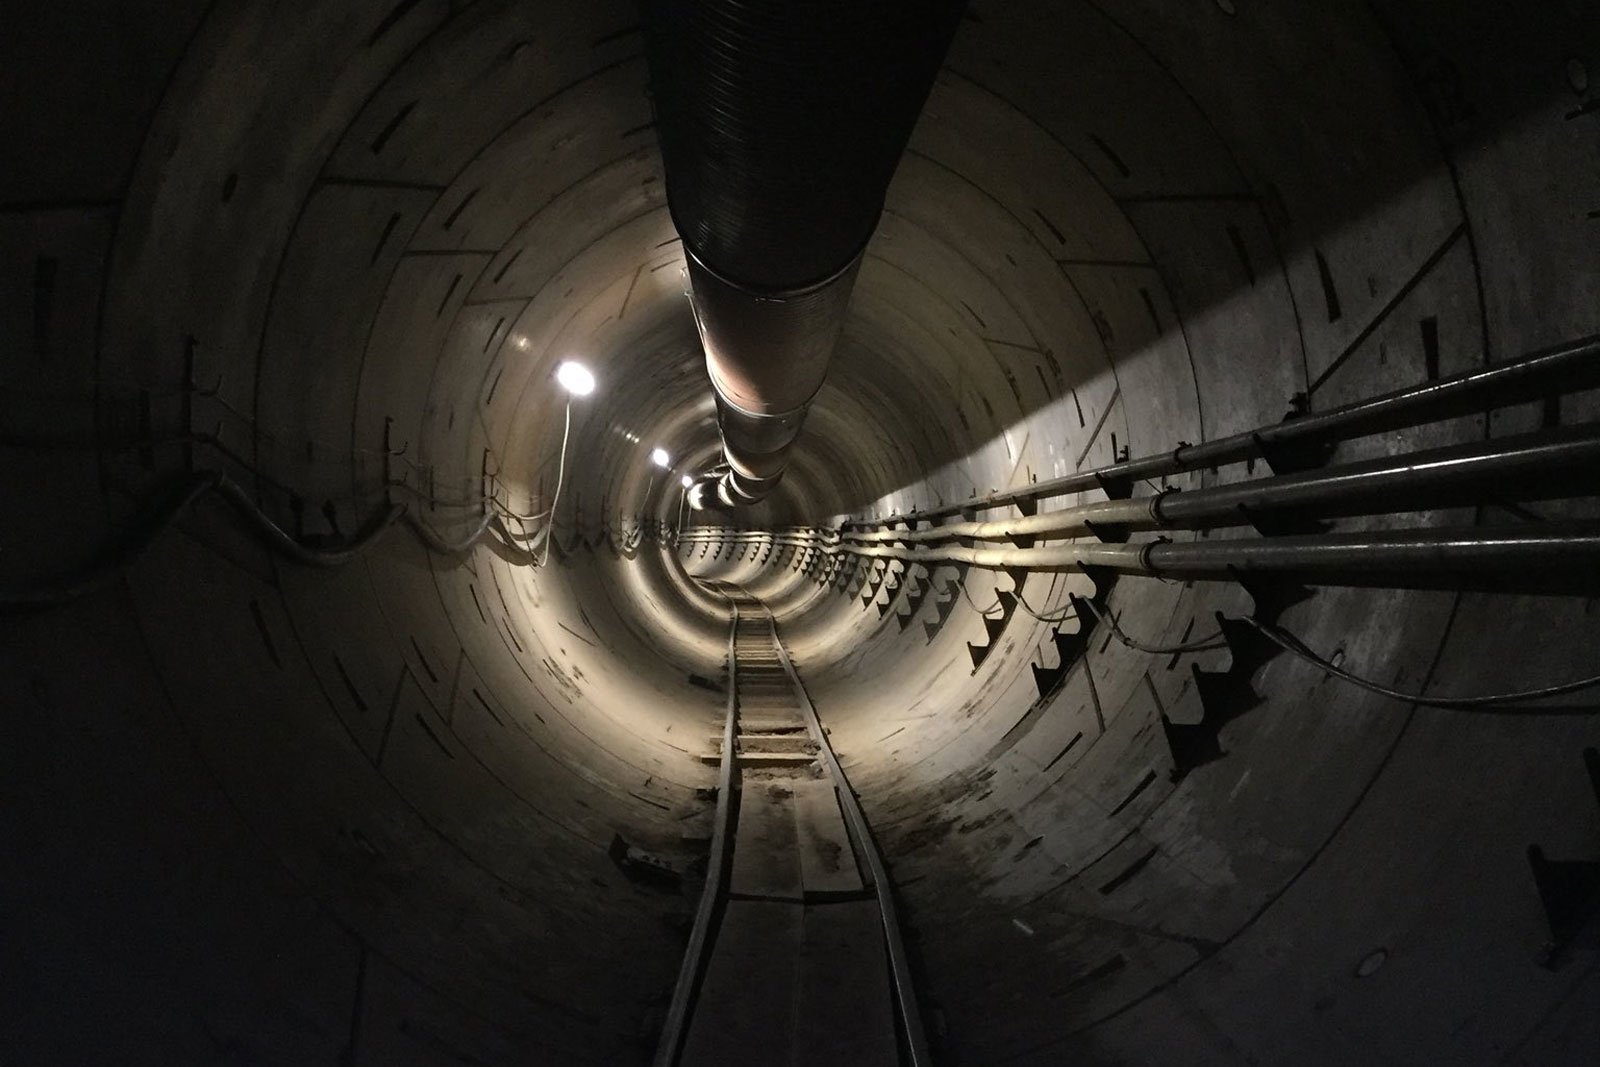 Travel through an underground tunnel Elon musk will be free